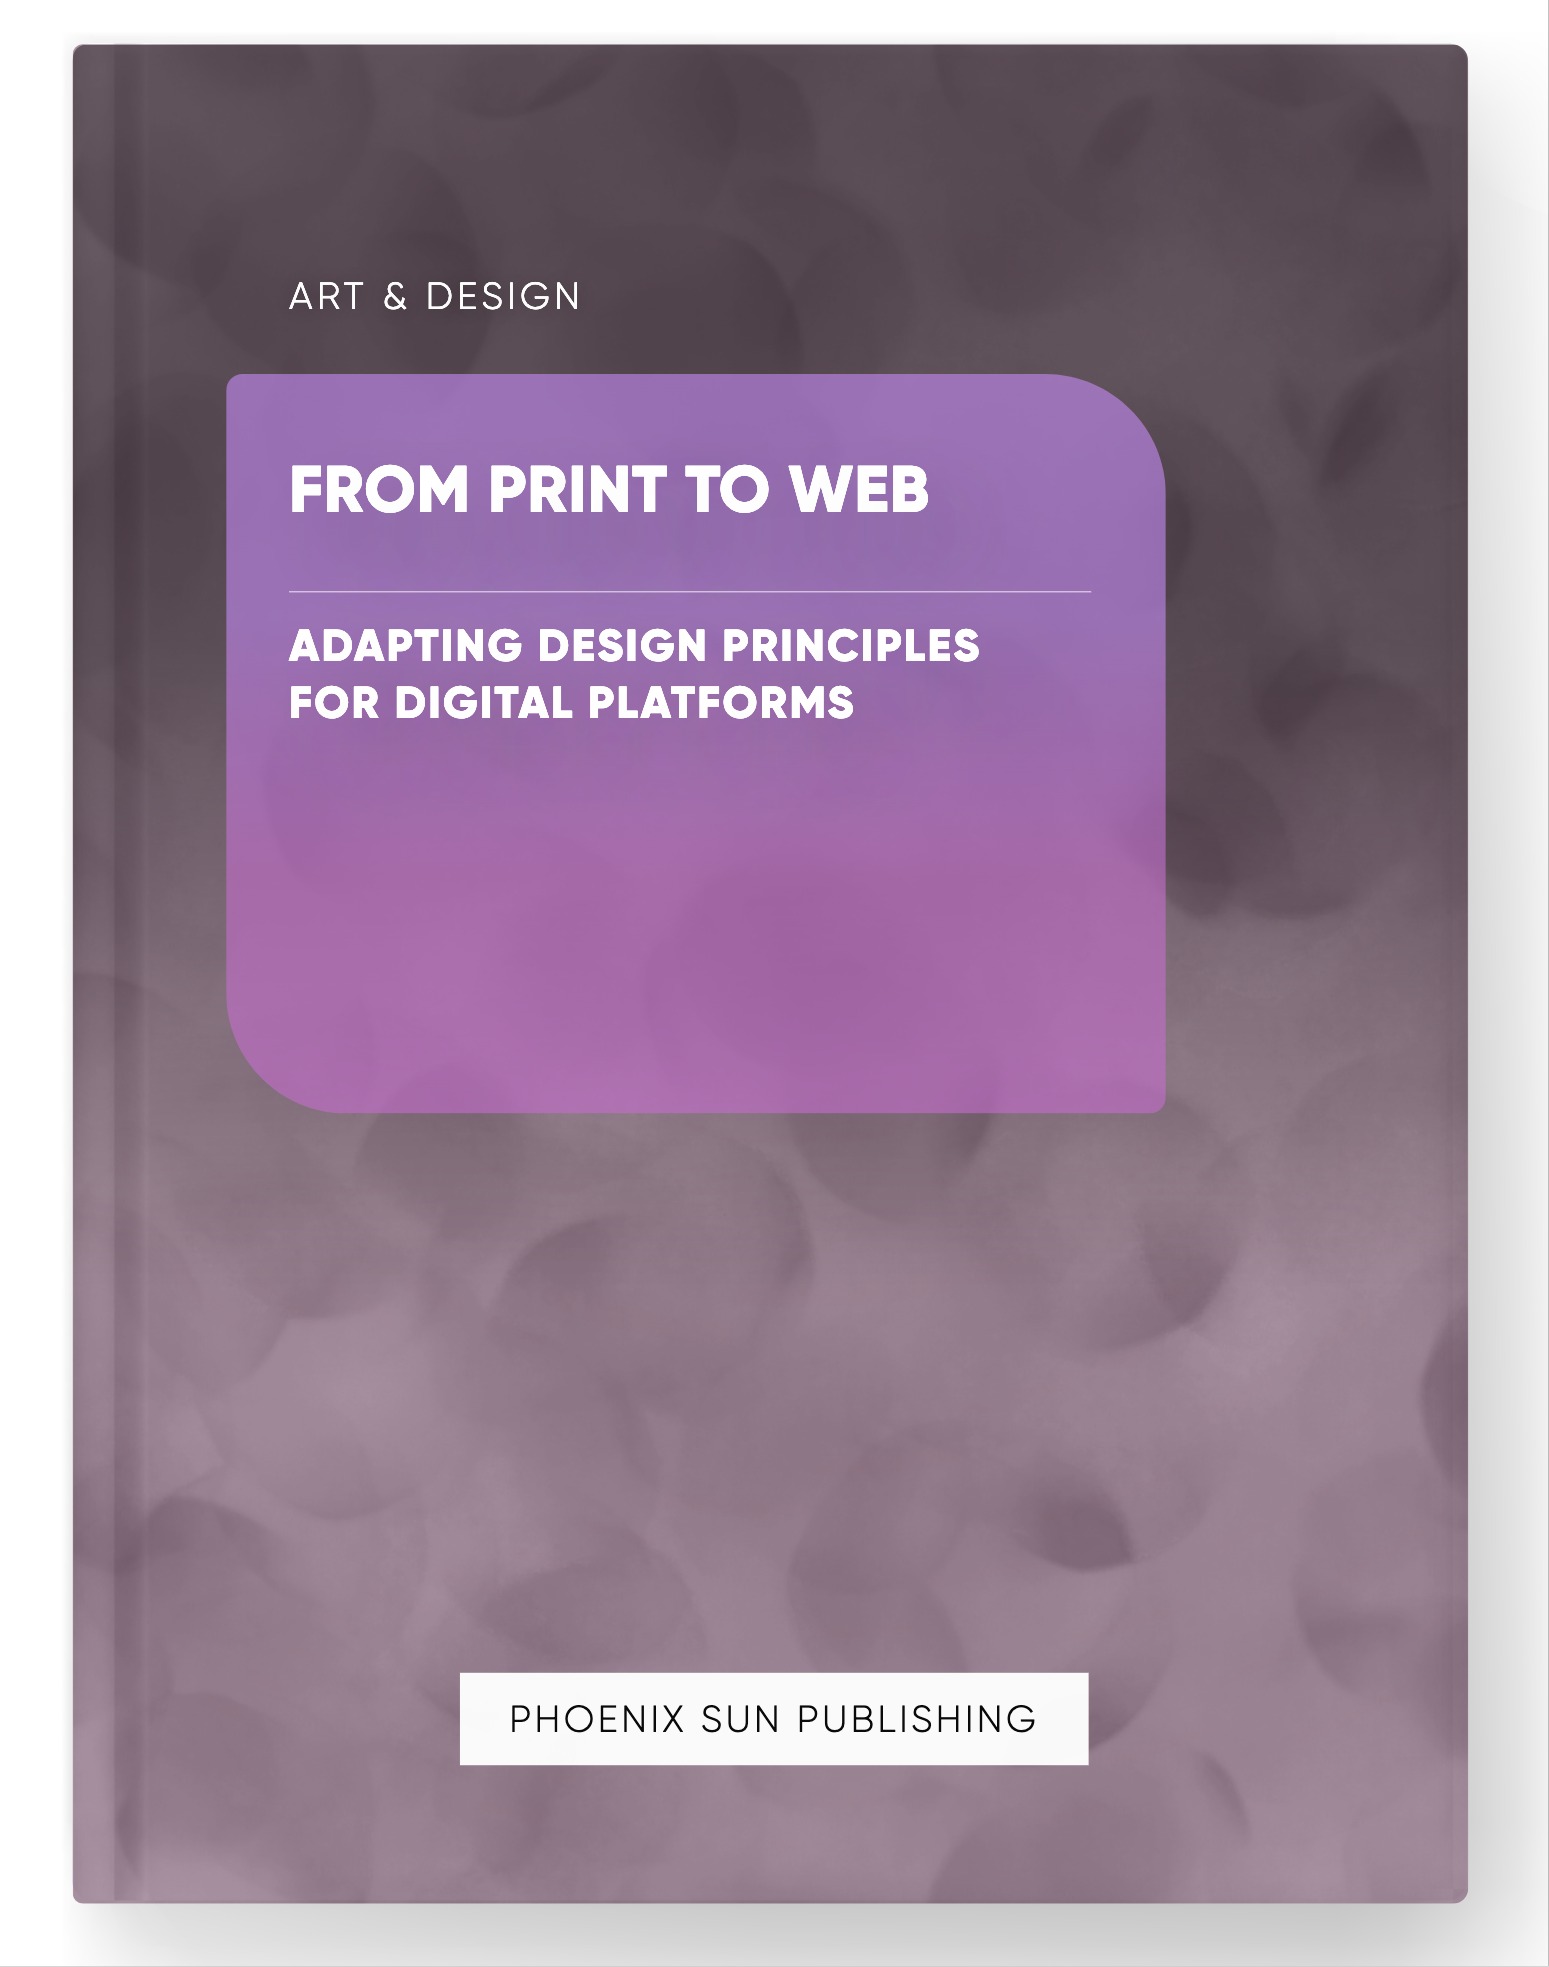 From Print to Web – Adapting Design Principles for Digital Platforms